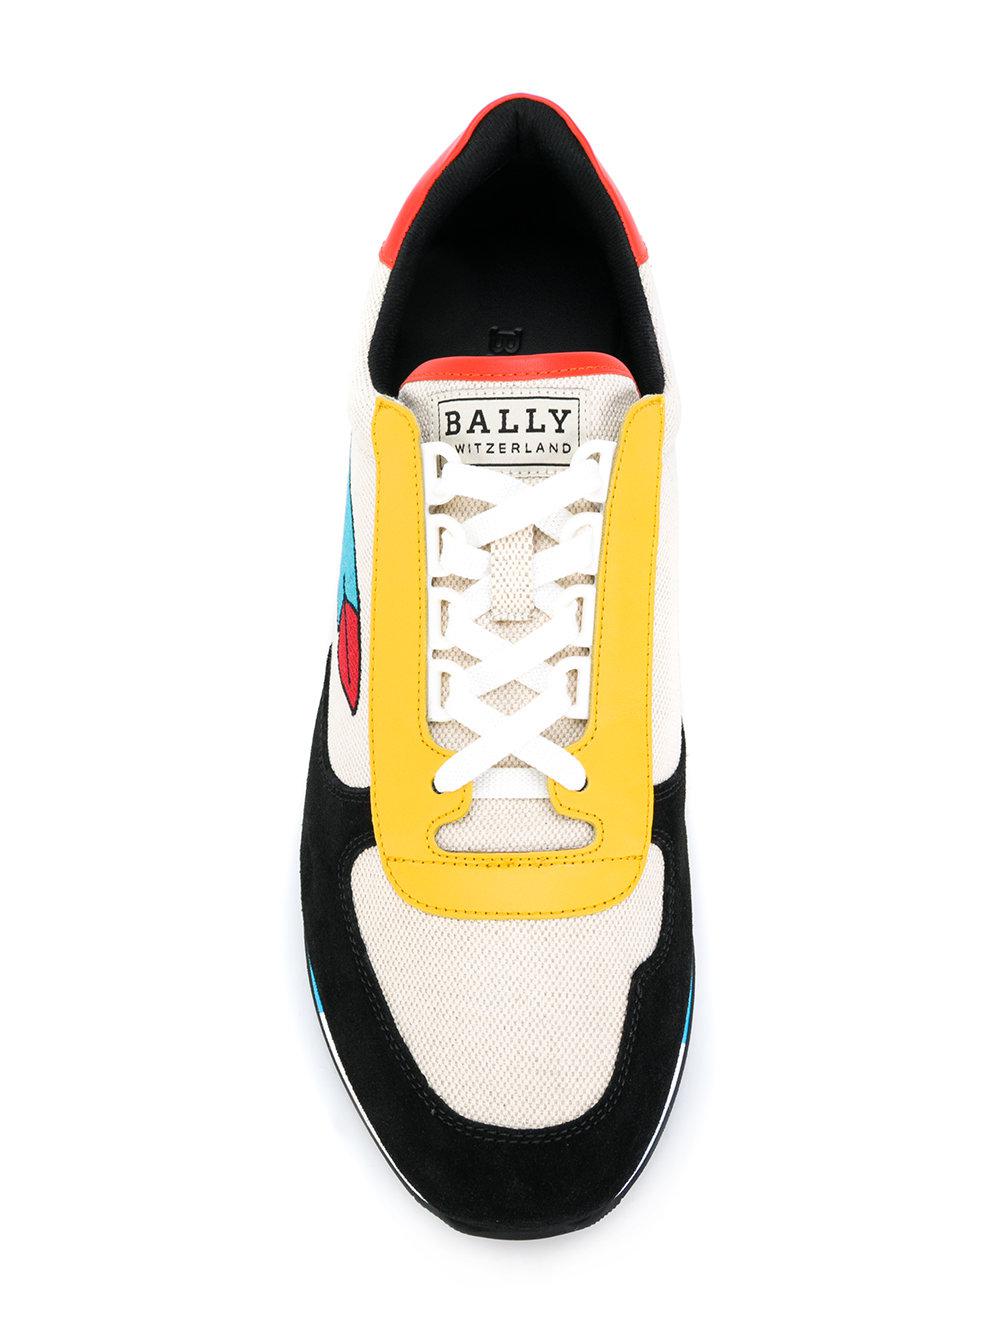 Bally Leather Gavino Sneakers for Men | Lyst